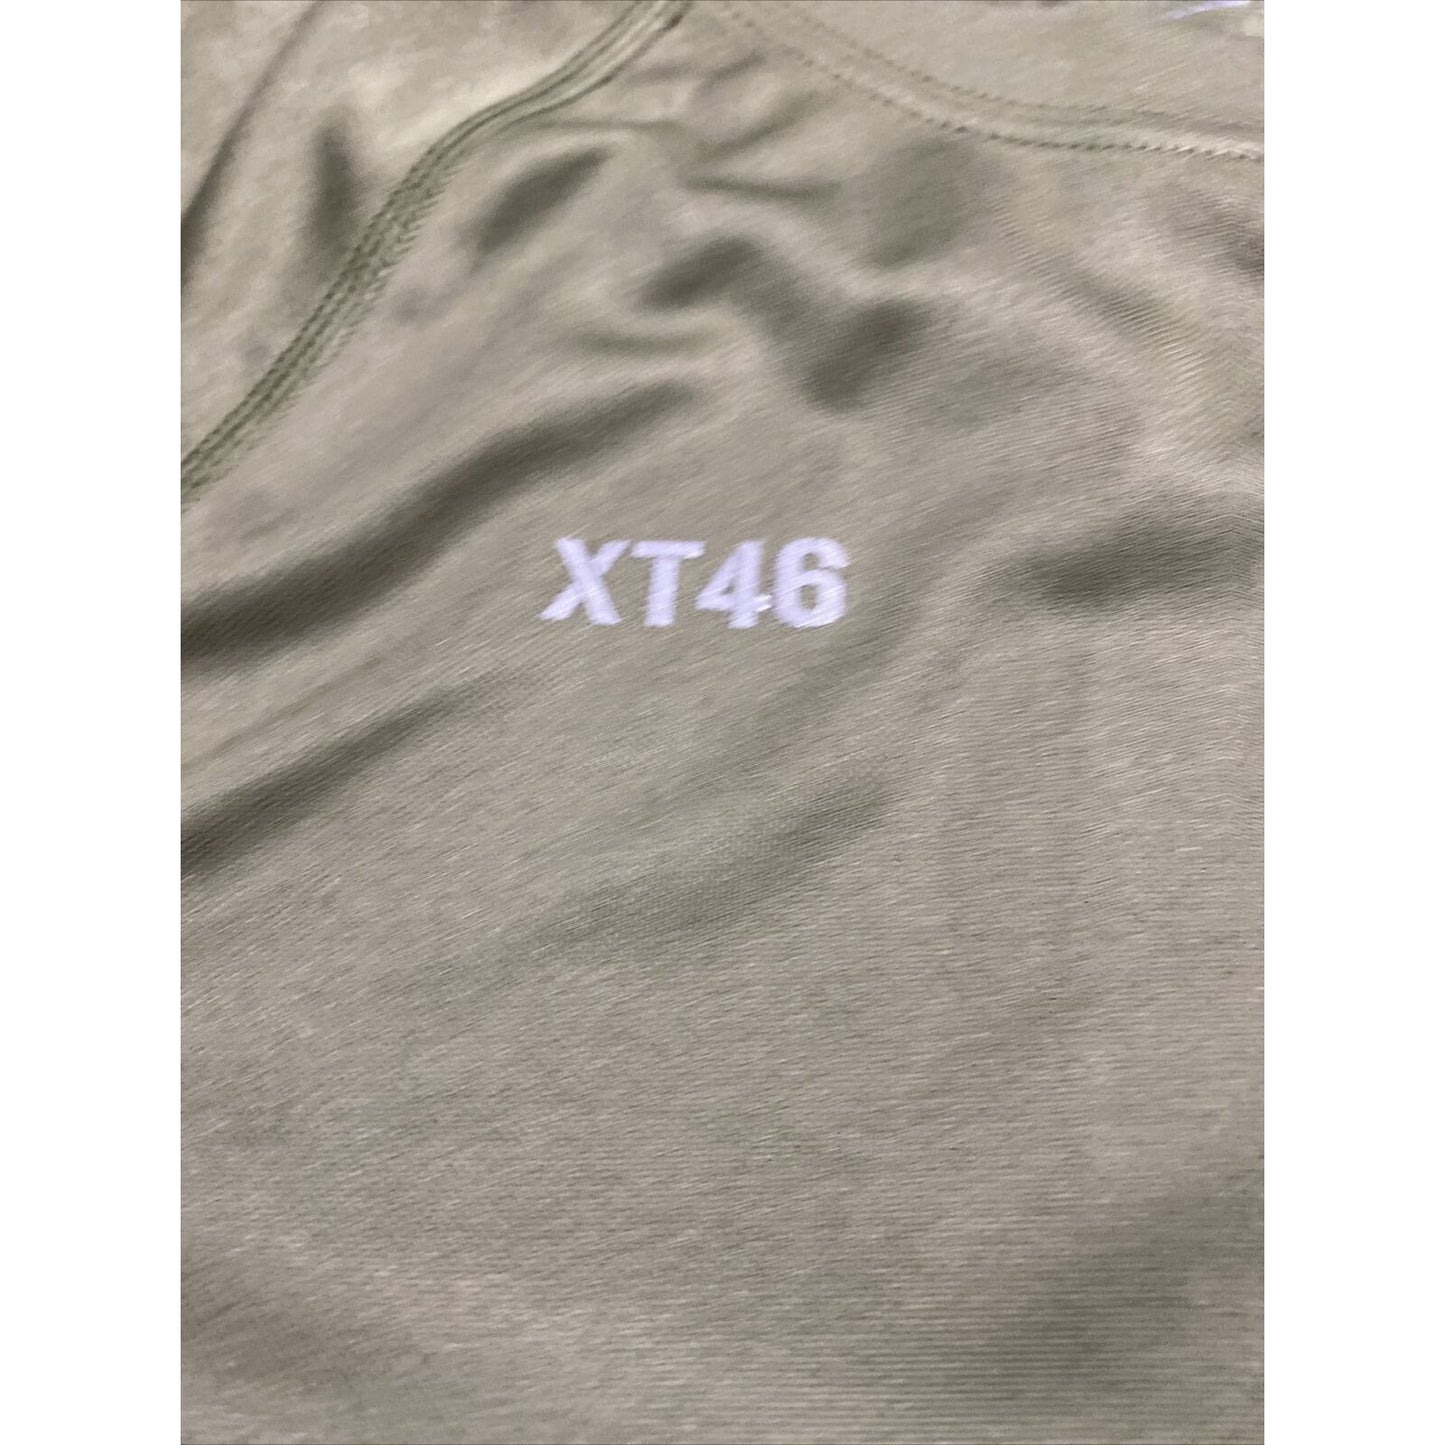 Soffe Extreme Training XT46 Men’s Medium Green Camo Military Polyester Shirt NWT